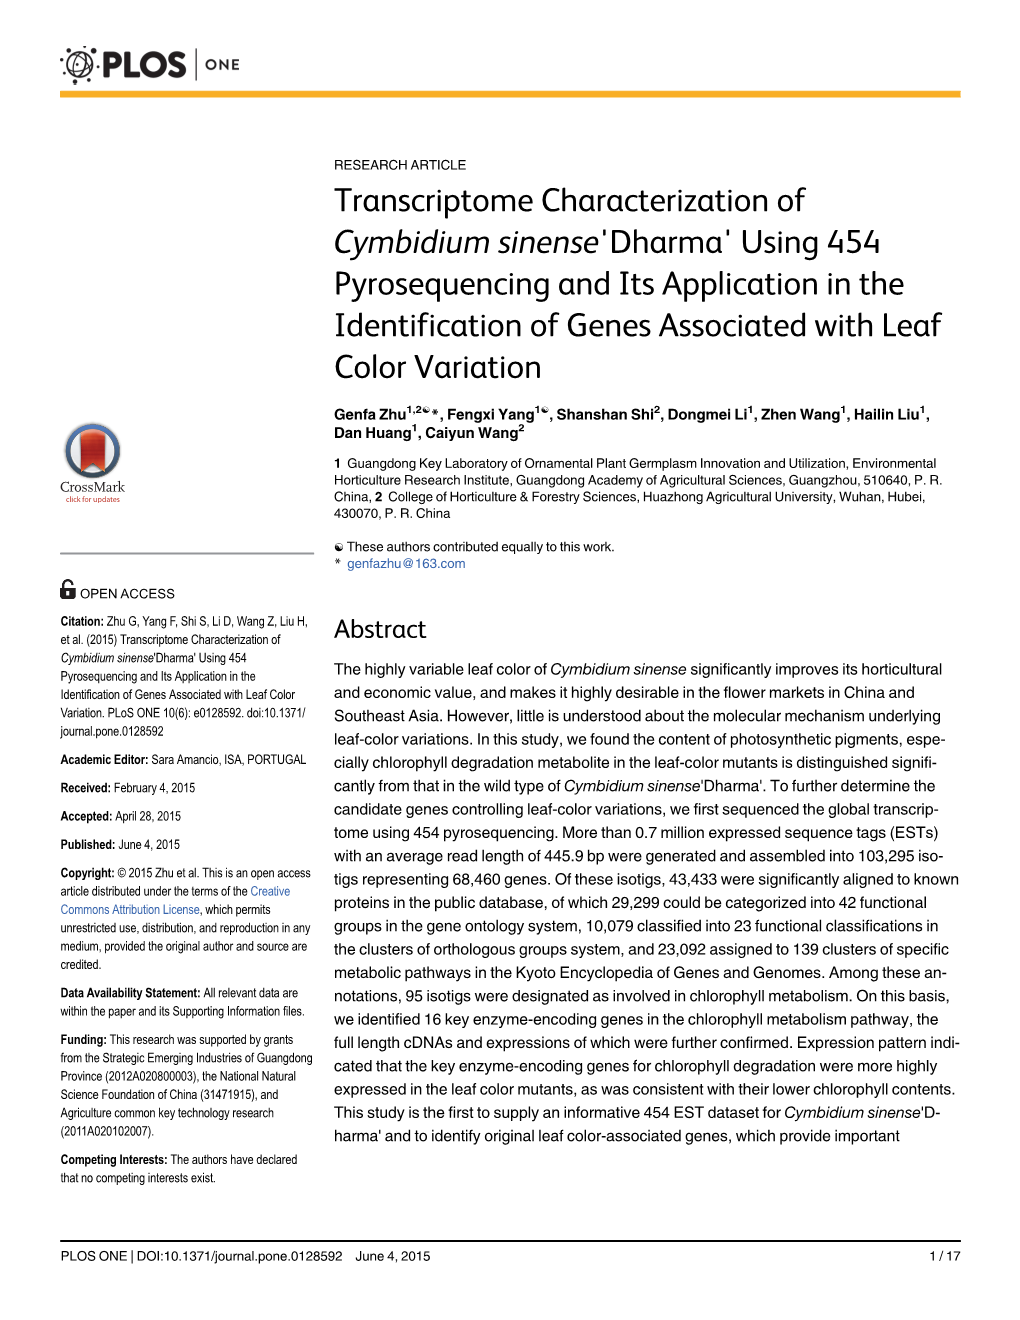 Transcriptome Characterization of Cymbidium Sinense'dharma'using